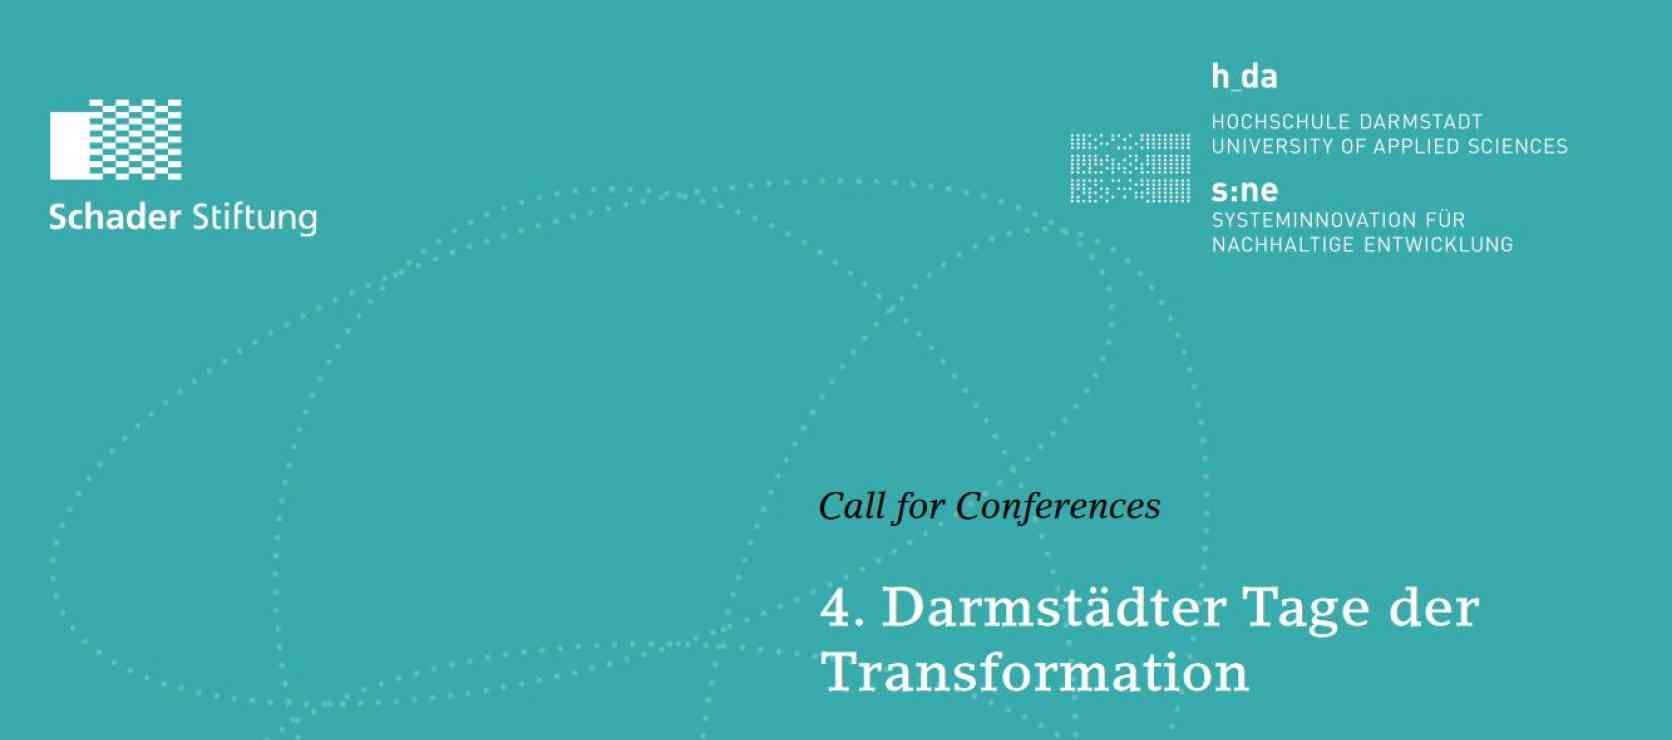 Call for Conferences: Darmstädter Tage der Transformation 2022